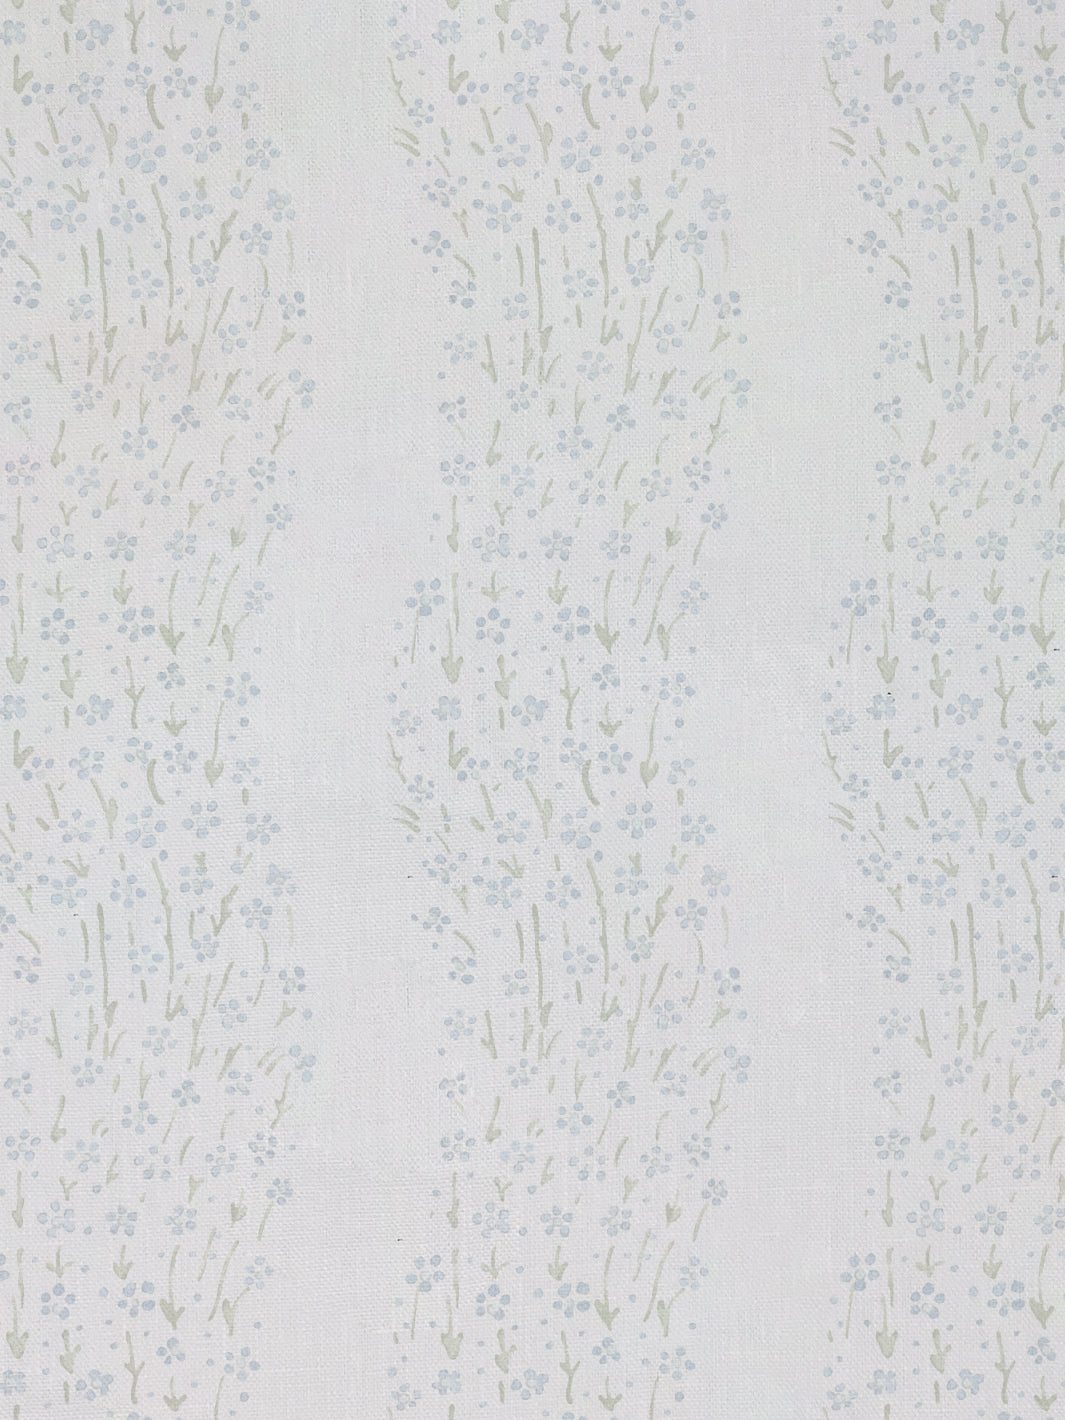 &#39;Hillhouse Floral Disty Wave&#39; Linen Fabric - Blue Green